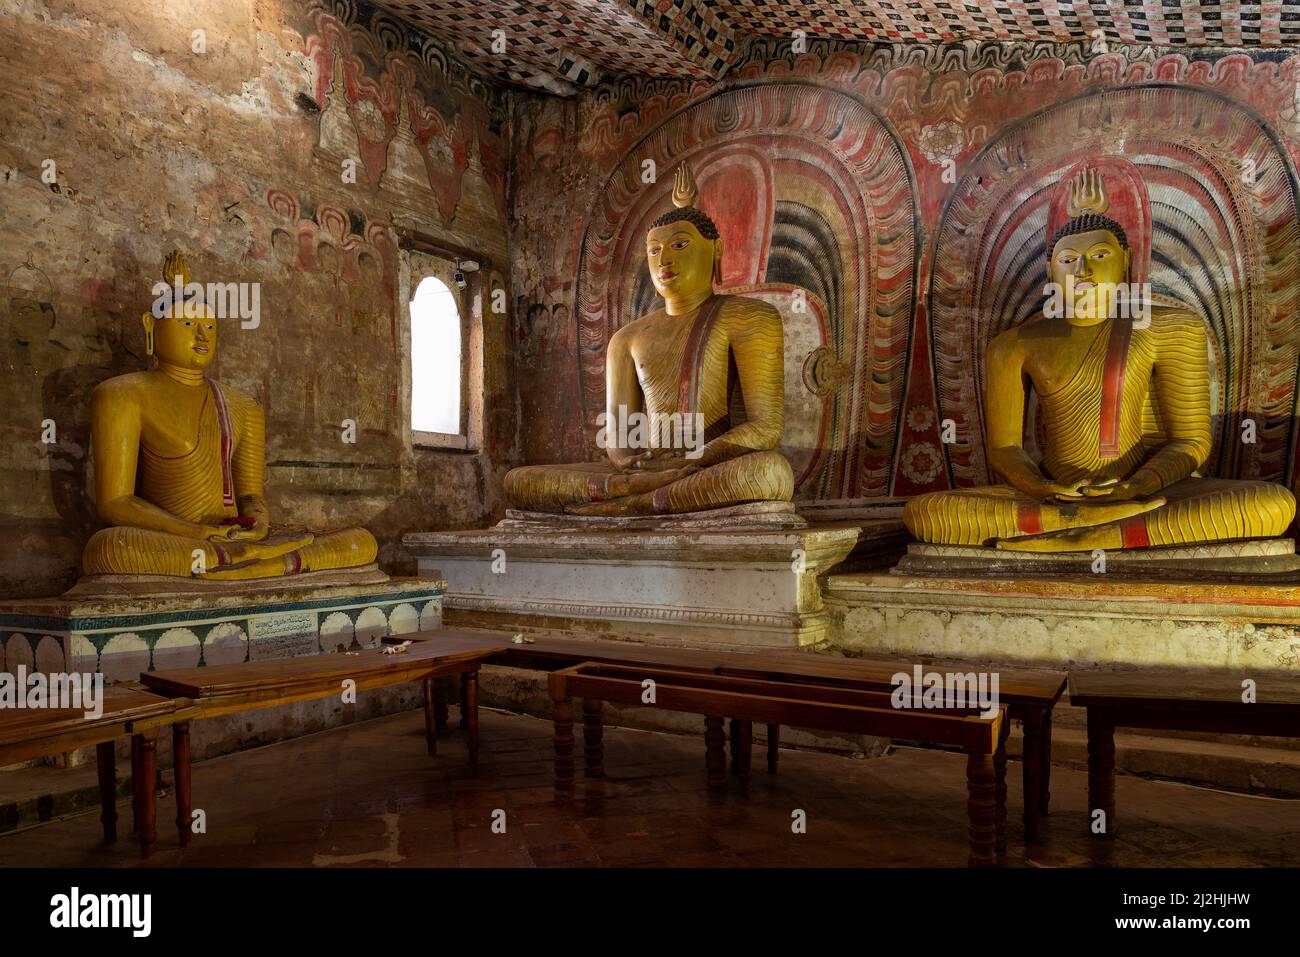 Alte Skulpturen eines sitzenden Buddha im Inneren eines alten buddhistischen Höhlentempels. Goldener Tempel (Rangiri Dambulu Raja Maha Viharaya). Dambull Stockfoto